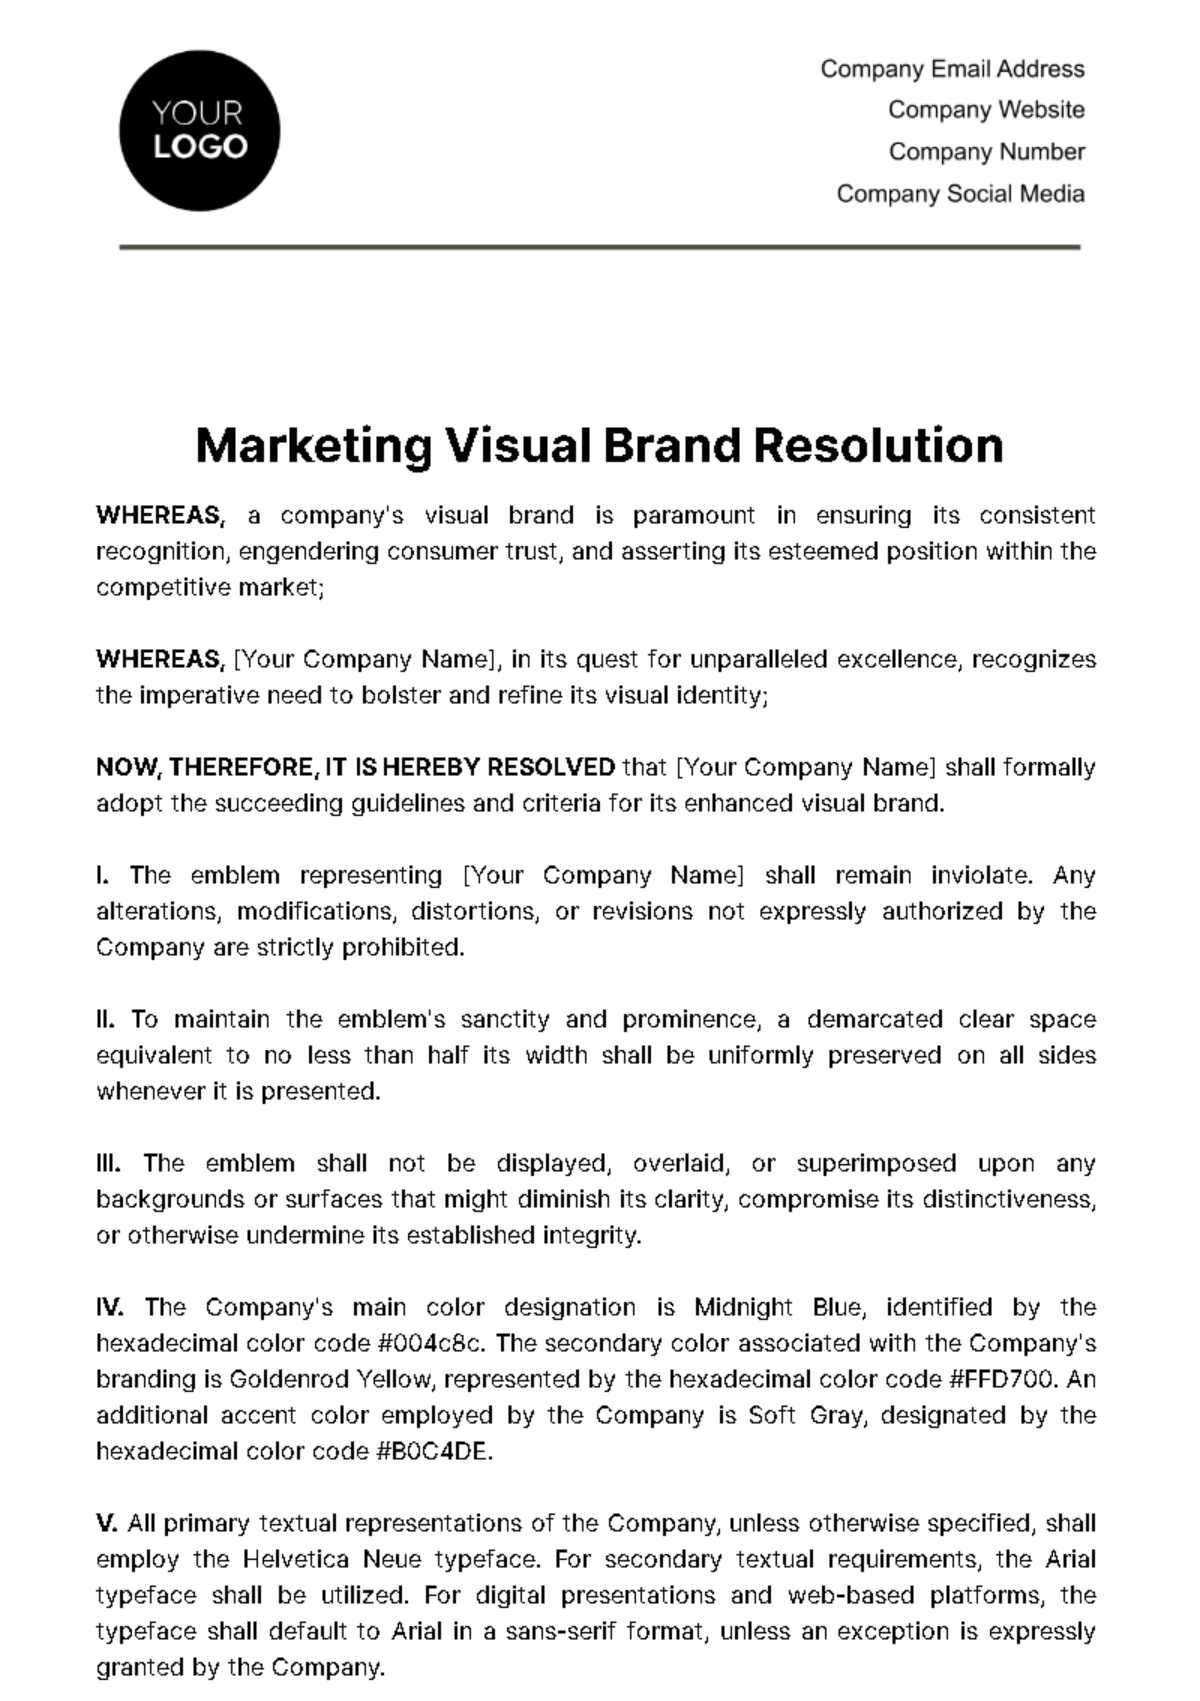 Marketing Visual Brand Resolution Template